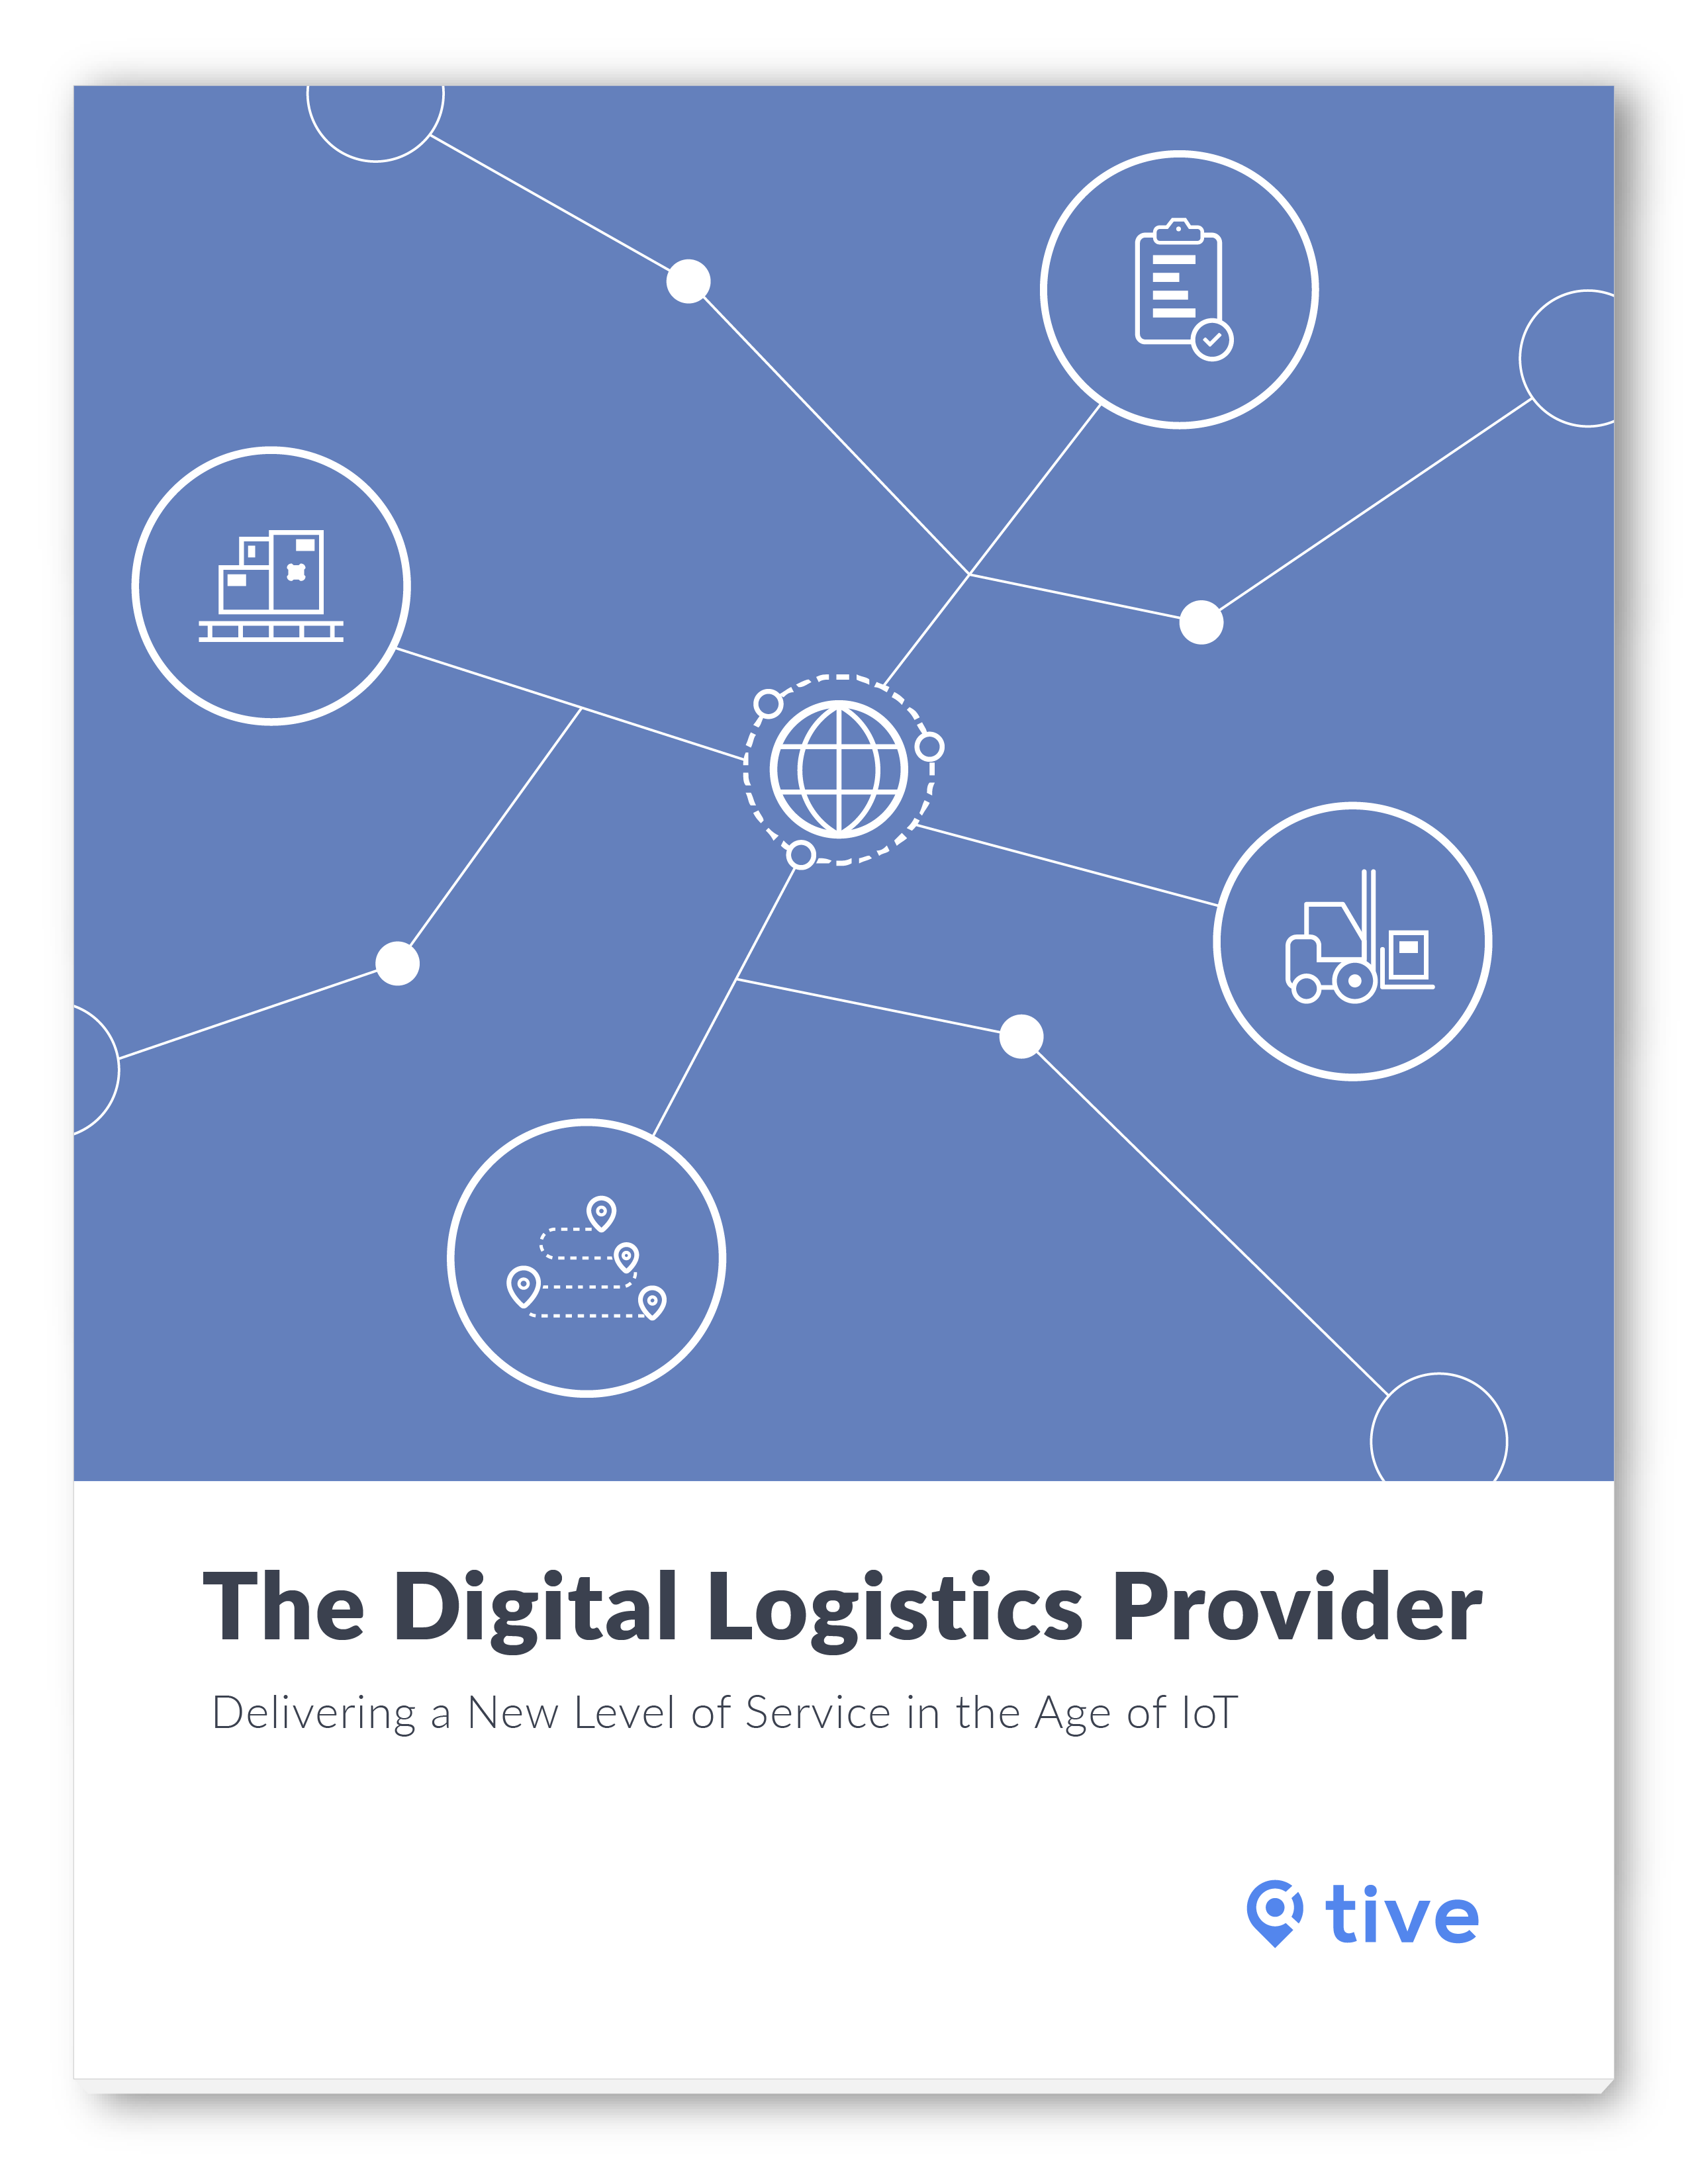 Tive - Digital Logistics Provider - Cover Image.png